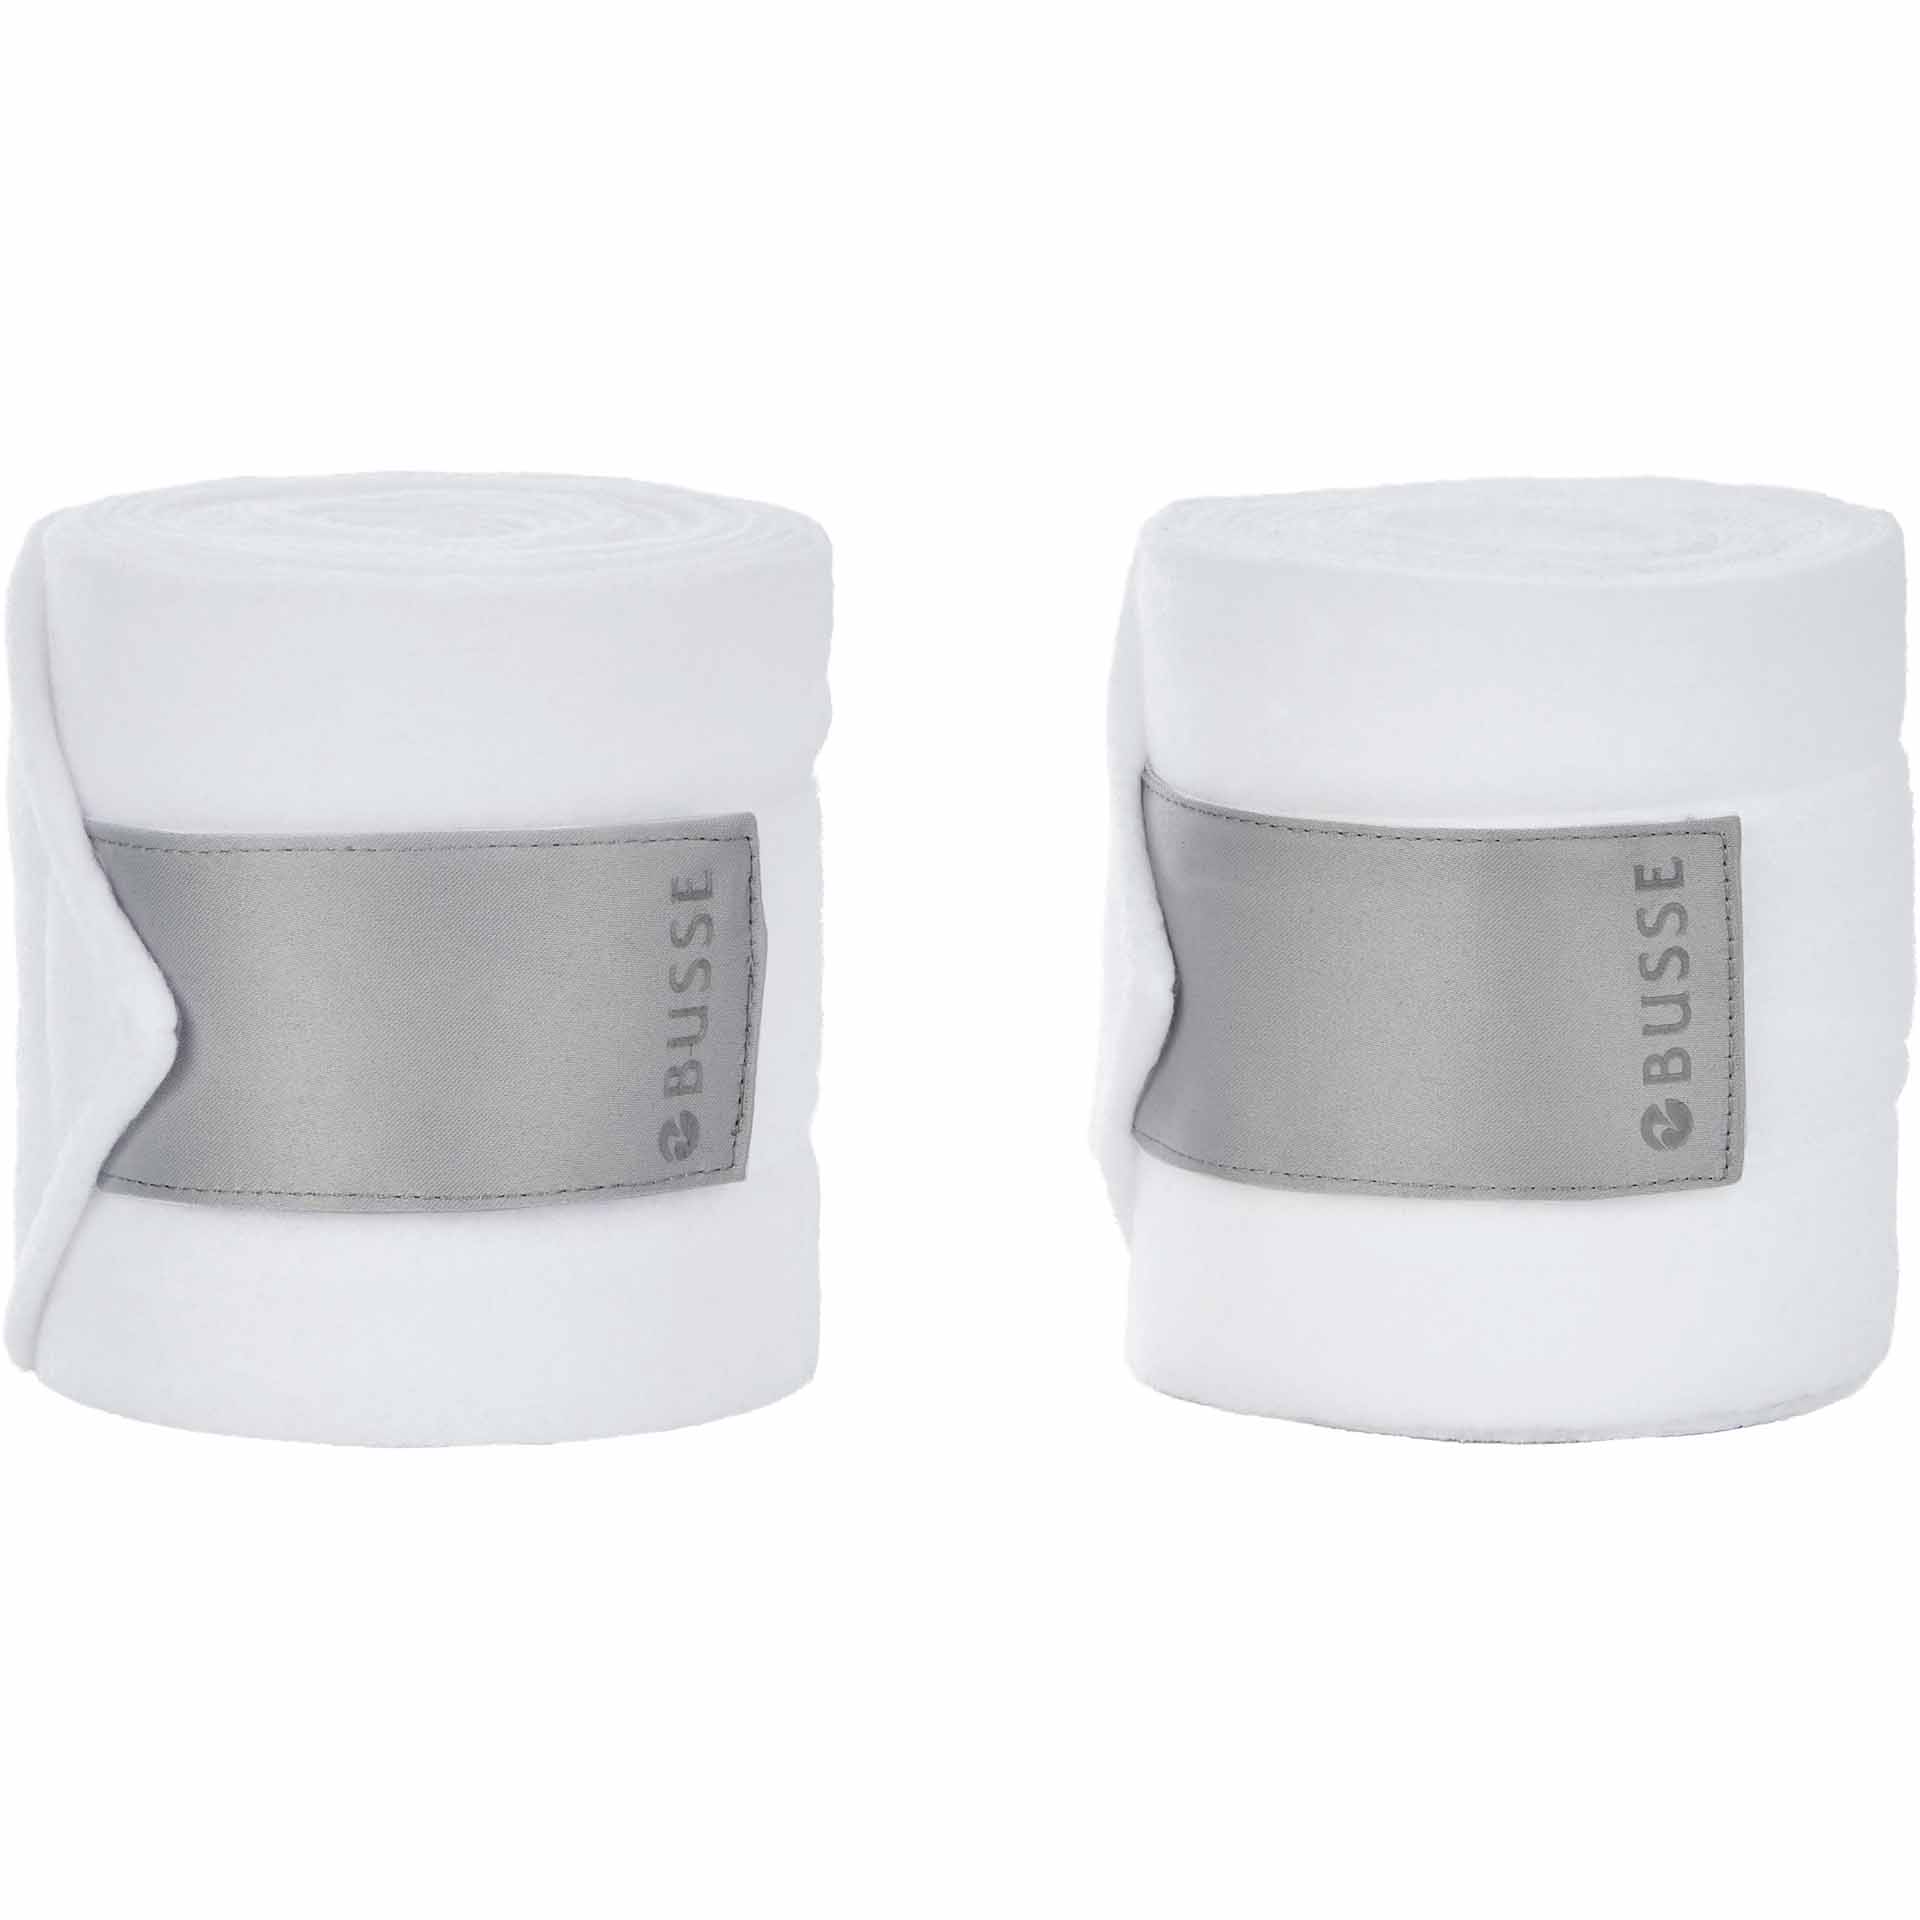 BUSSE Bandages CLASSIC SATIN 250x10 white/gray